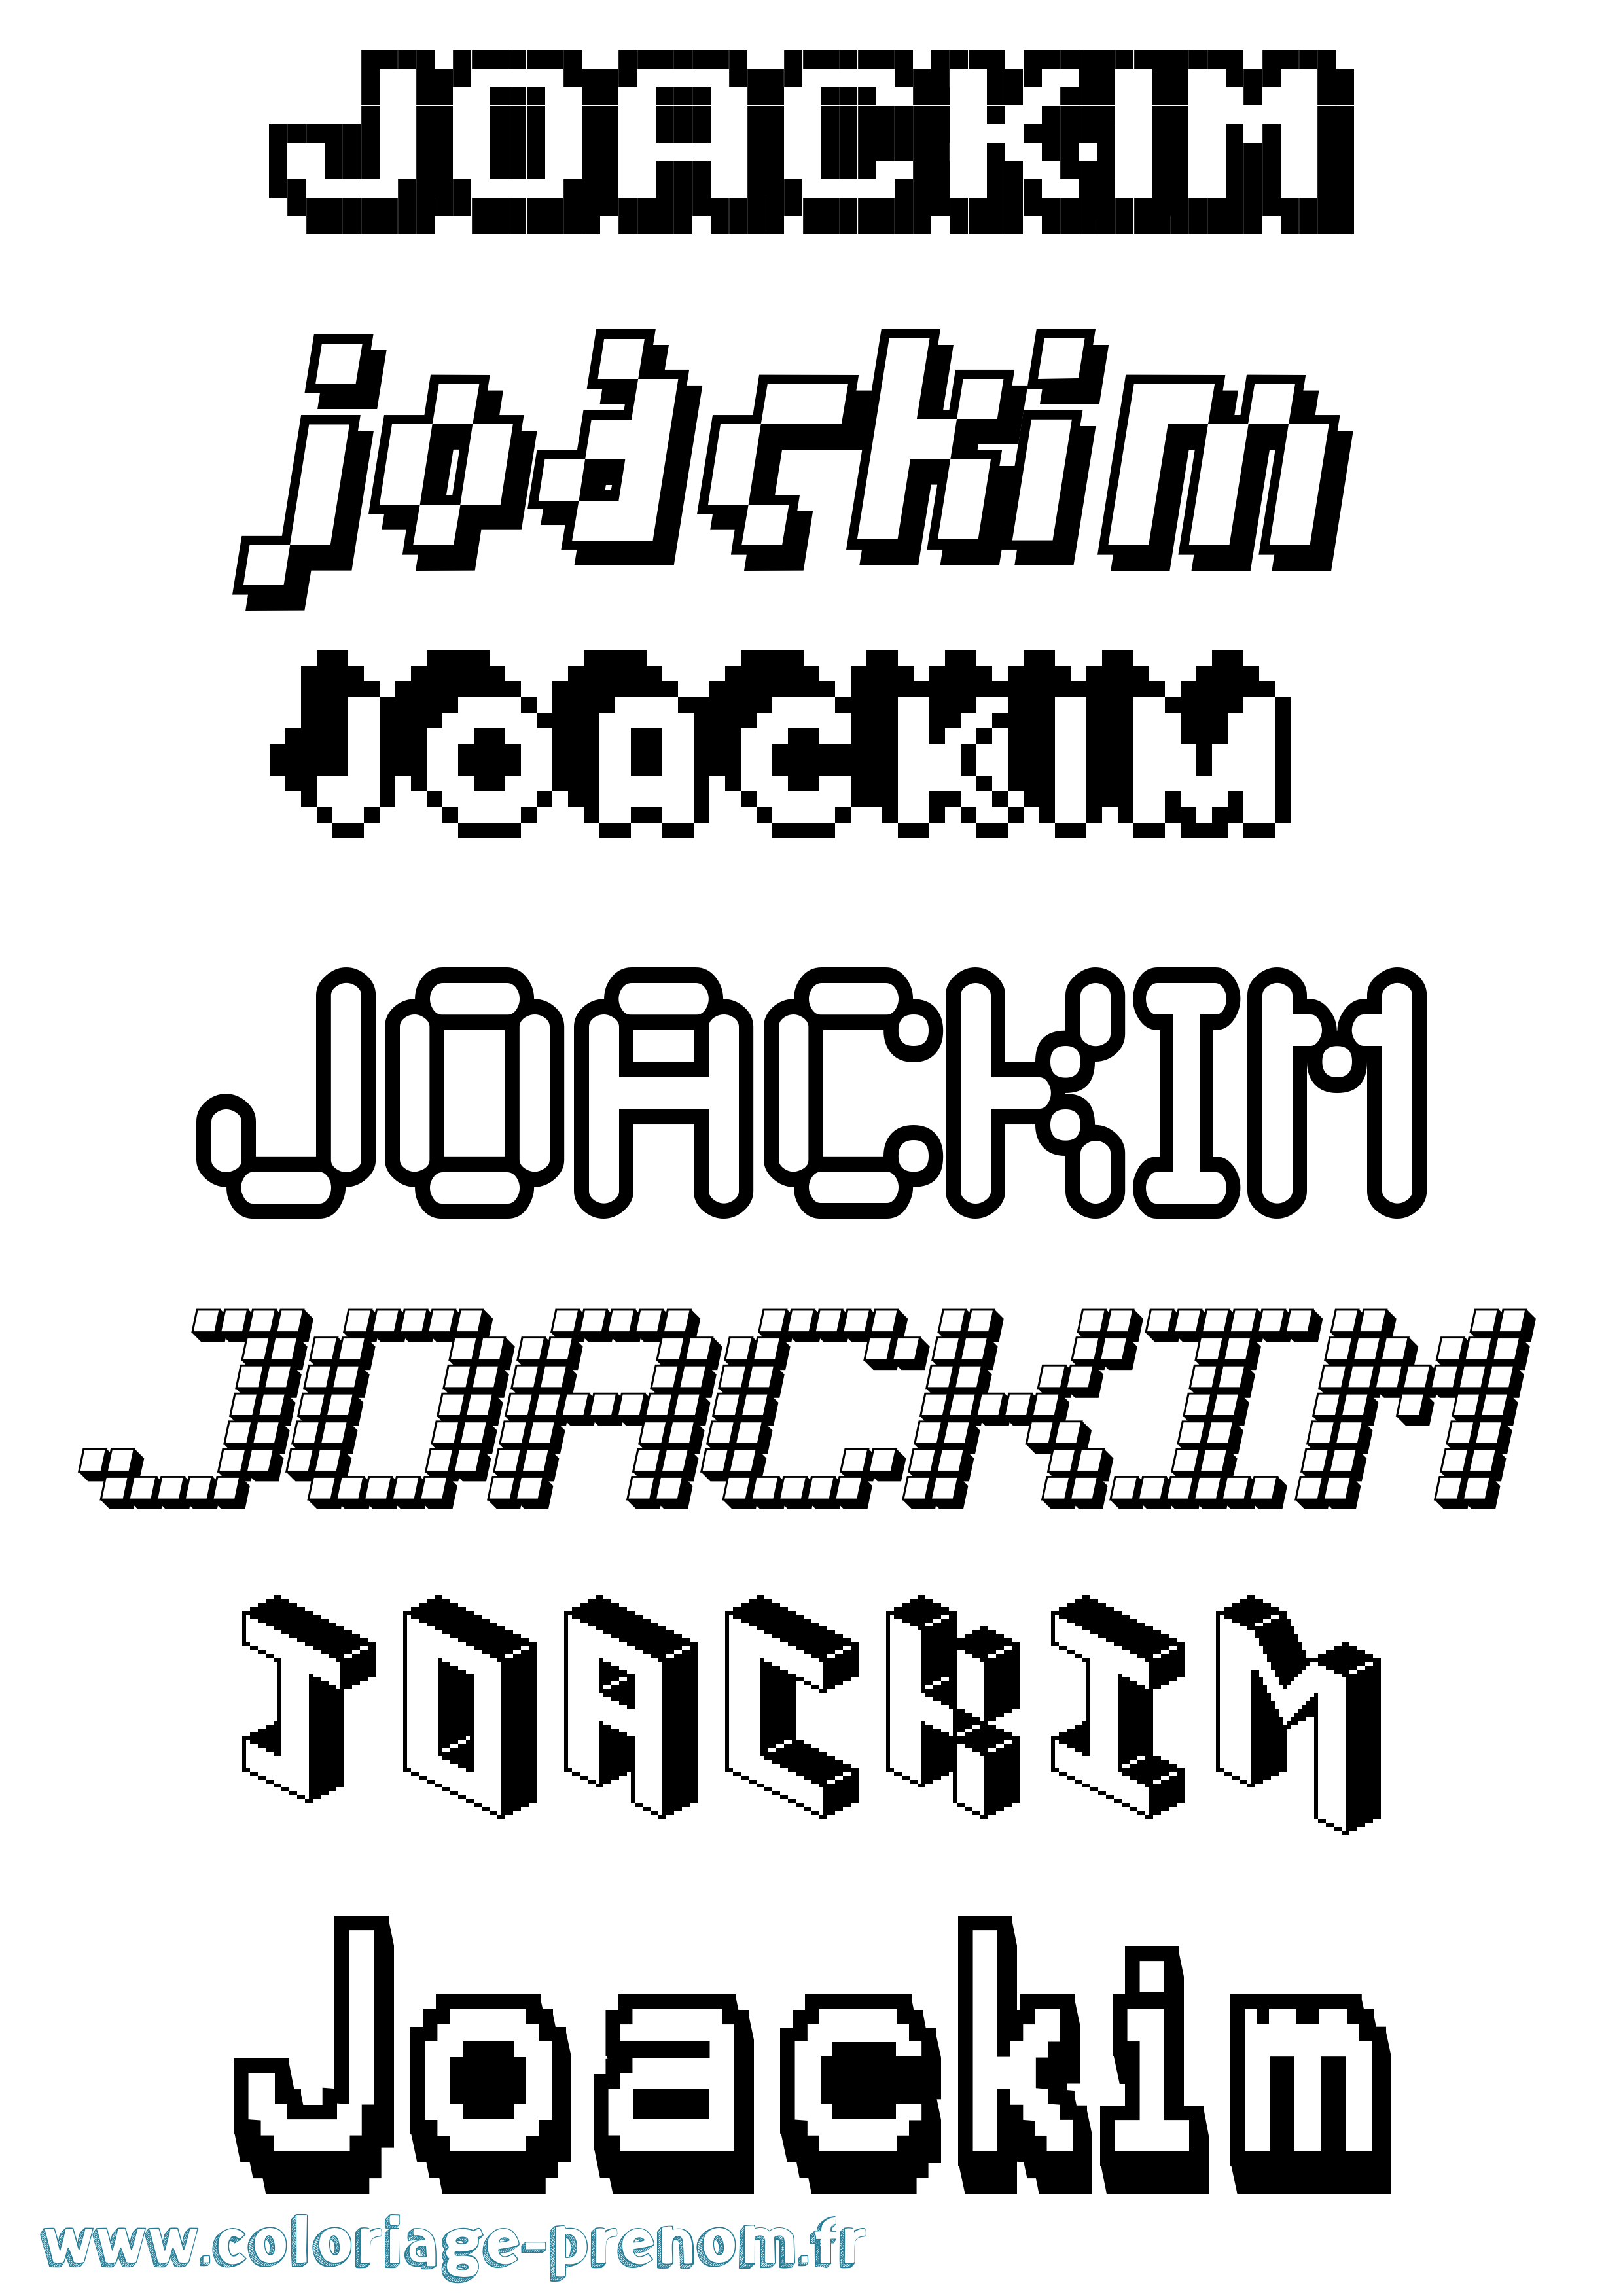 Coloriage prénom Joackim Pixel